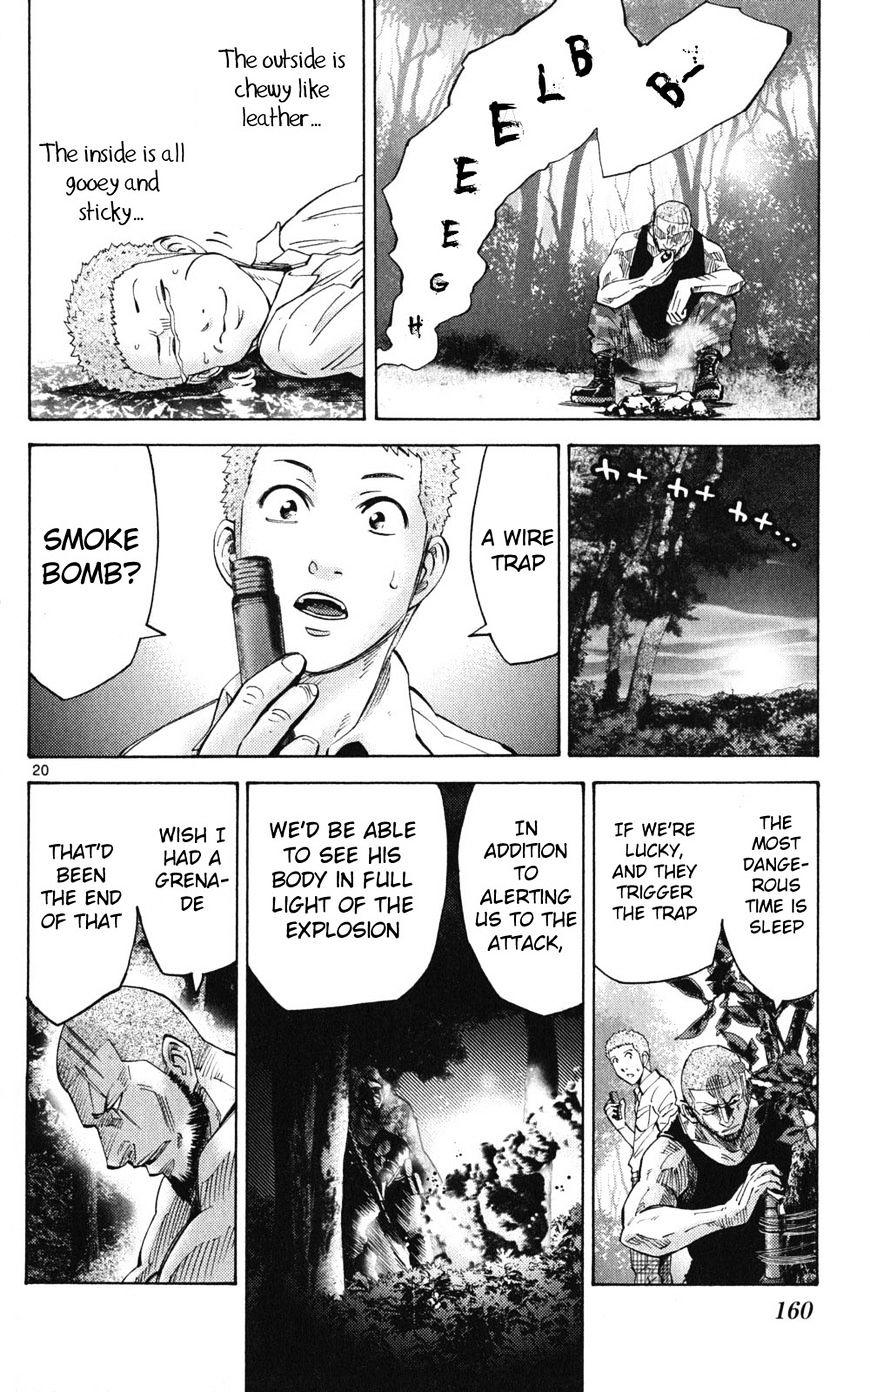 Imawa No Kuni No Alice Chapter 49.2 : Side Story 5 - King Of Spades (2) page 20 - Mangakakalot